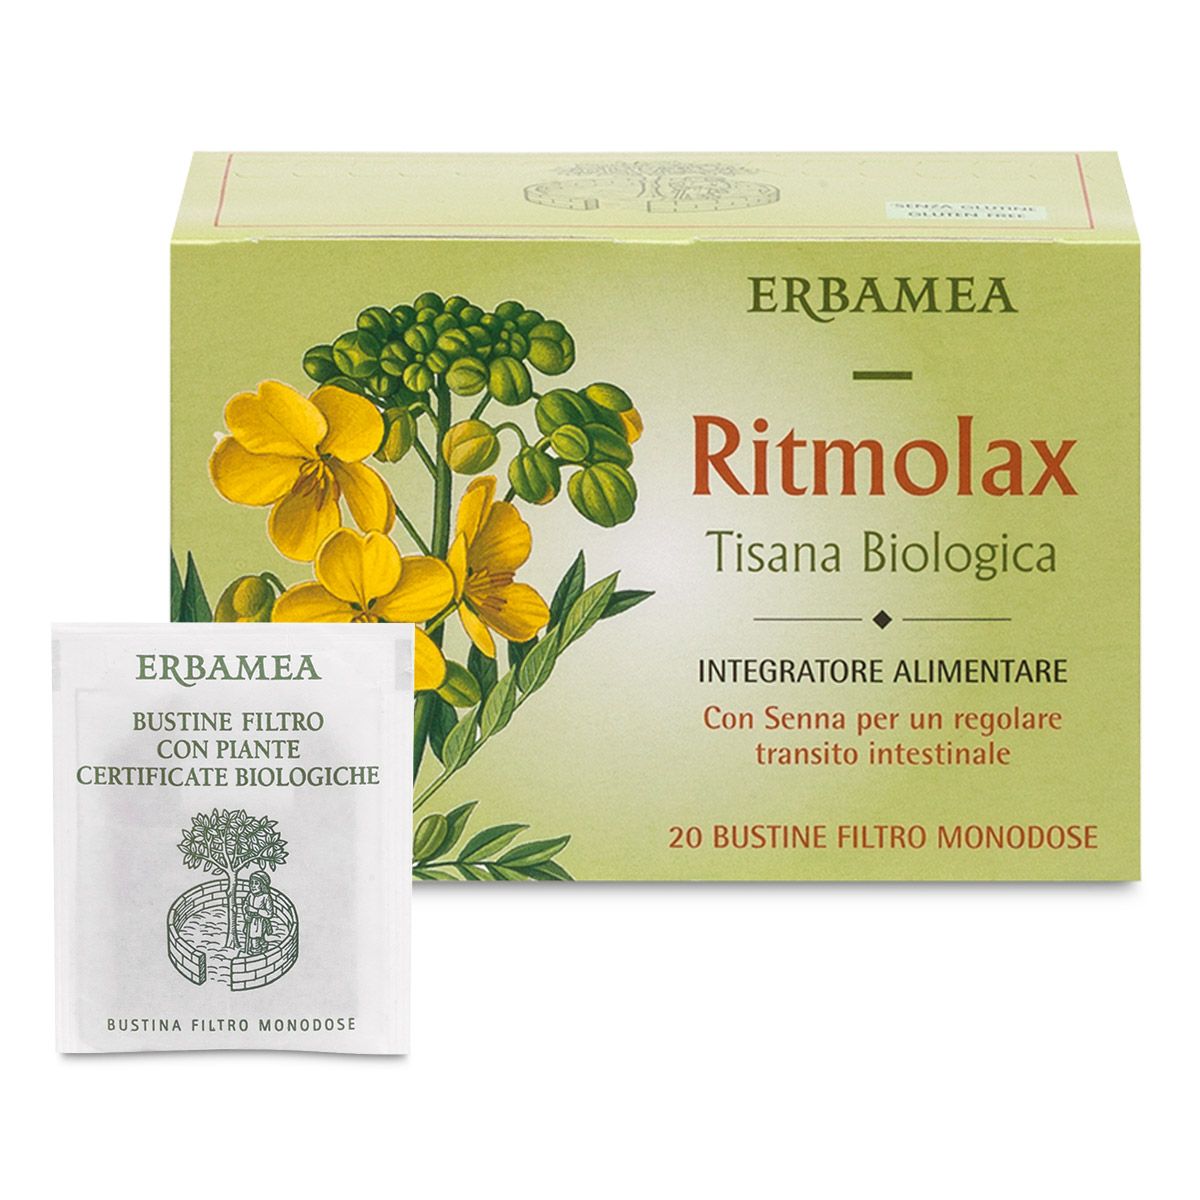 Erbamea Ritmolax Tisana Biologica Transito Intestinale 20 Bustine